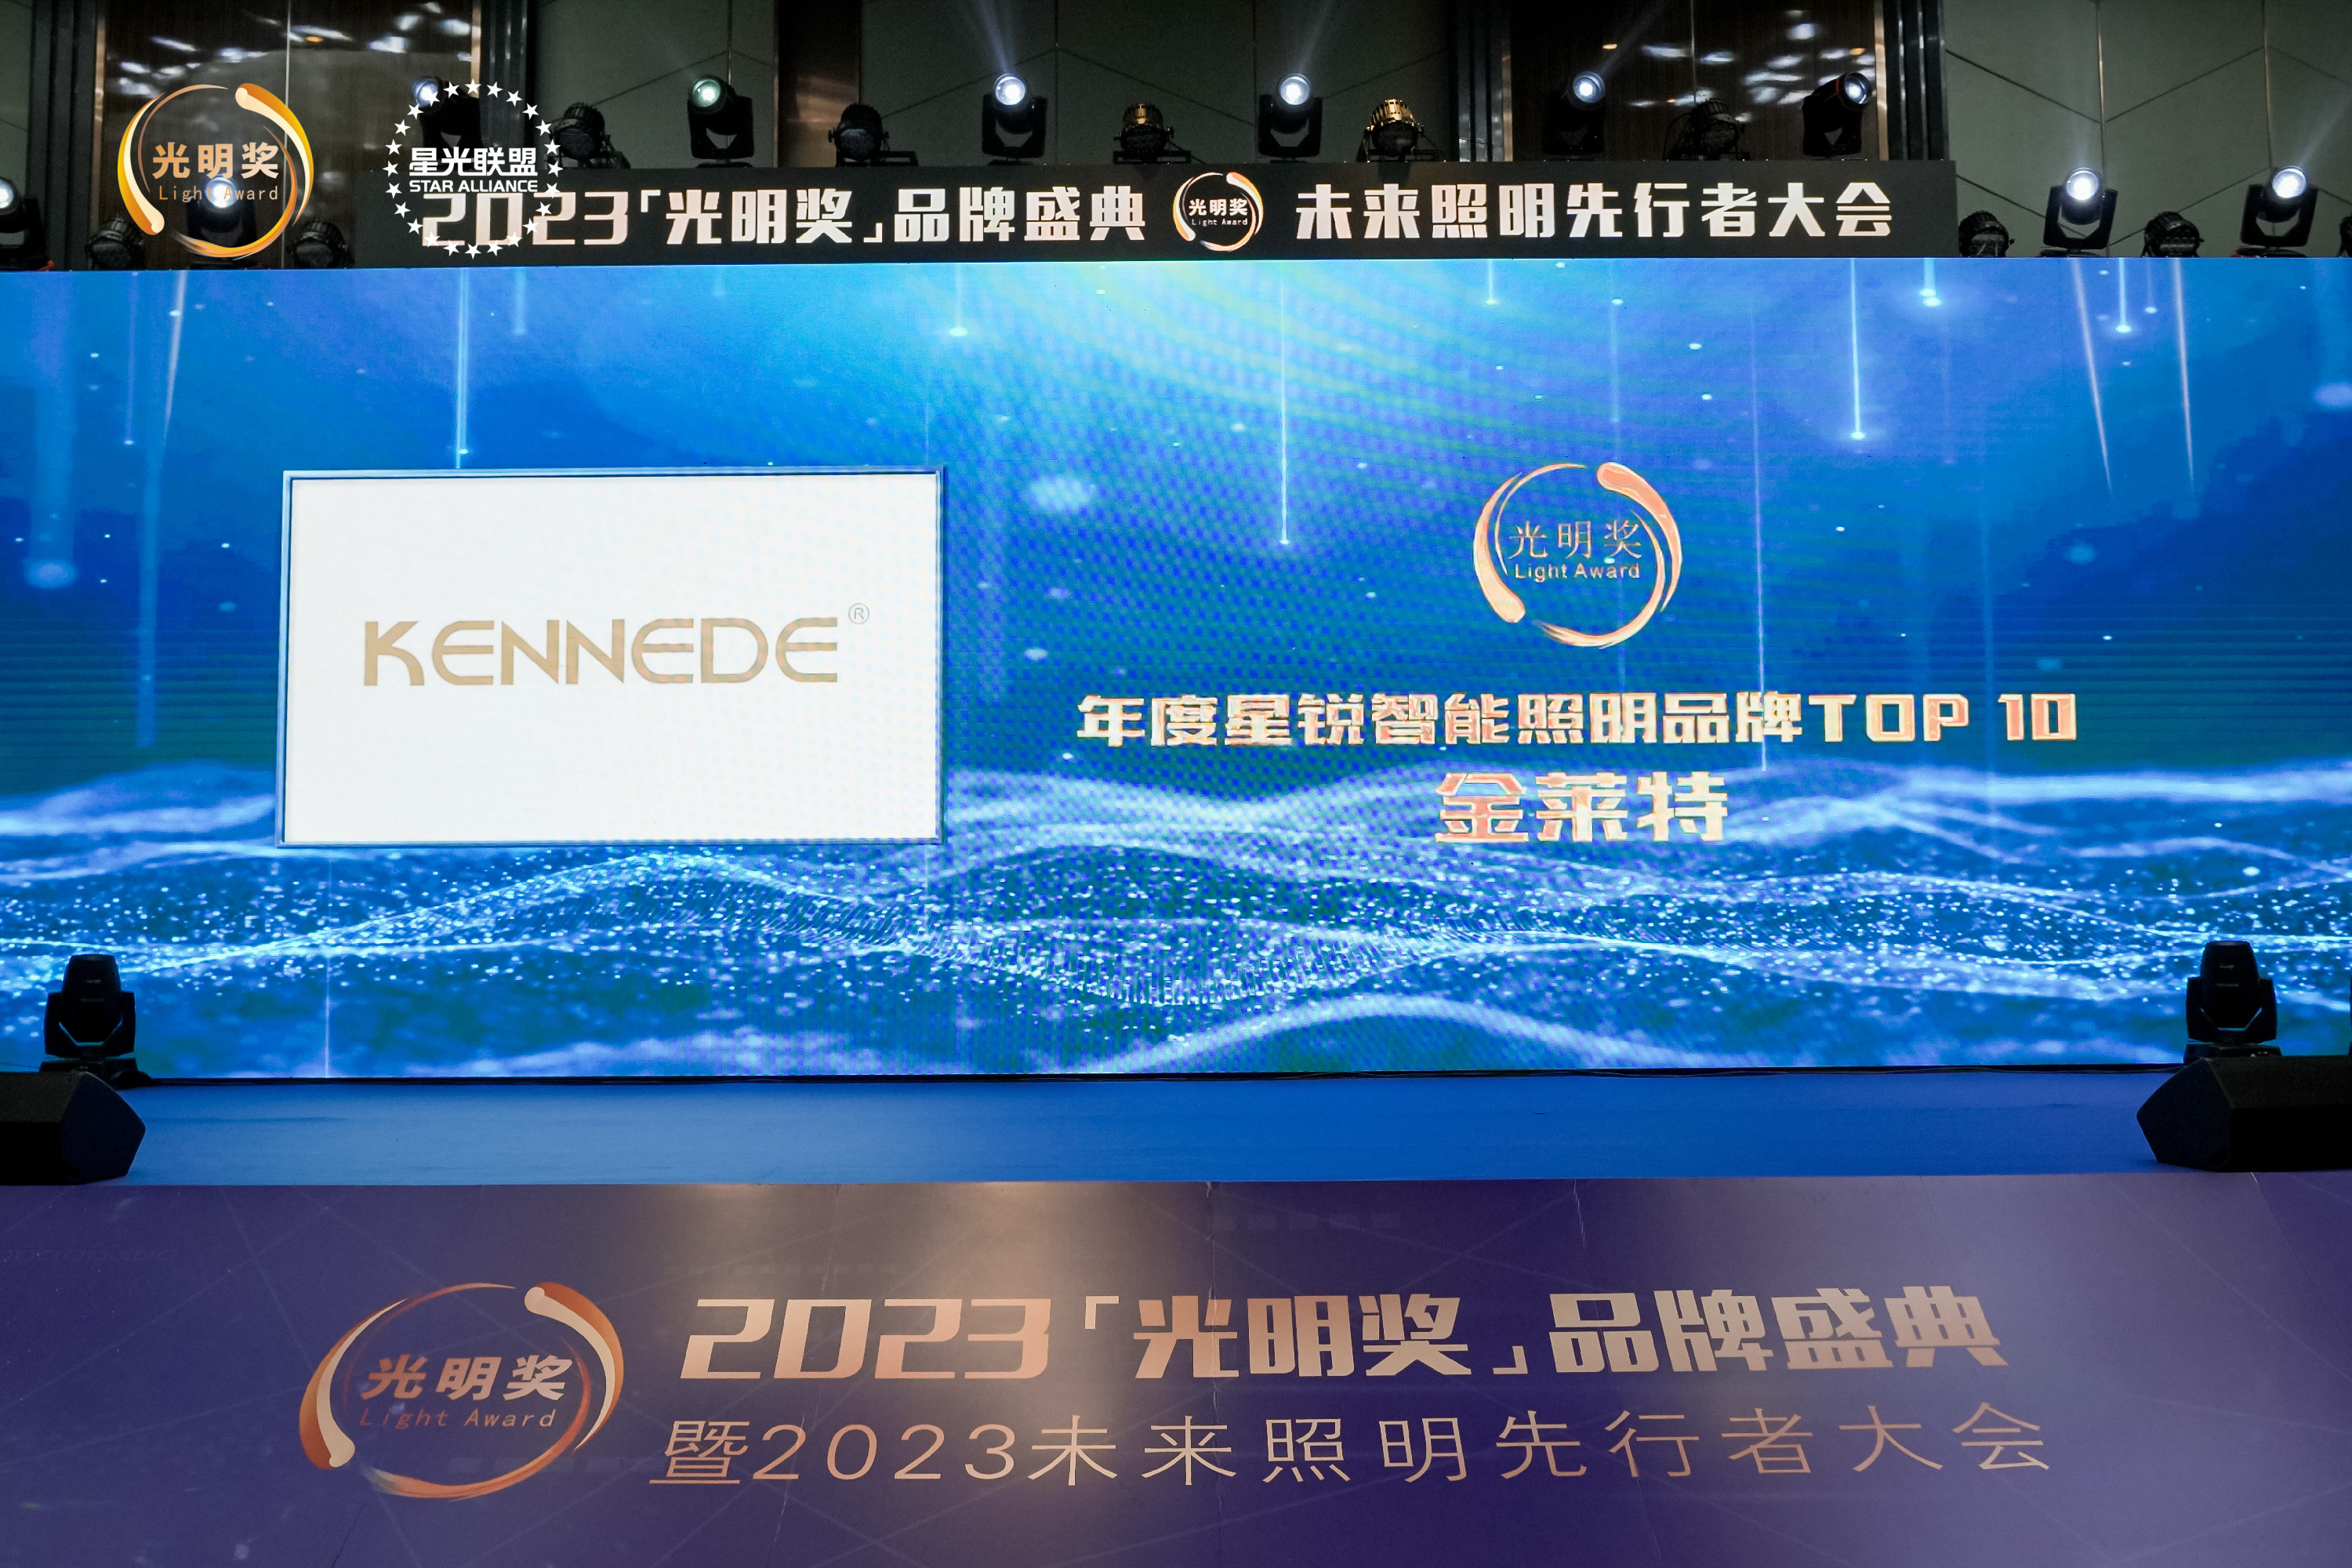 KENNEDE نے 2023 کی "برائٹ ایوارڈ" تقریب میں "اسٹار اسمارٹ لائٹنگ برانڈ" ایوارڈ جیتا۔